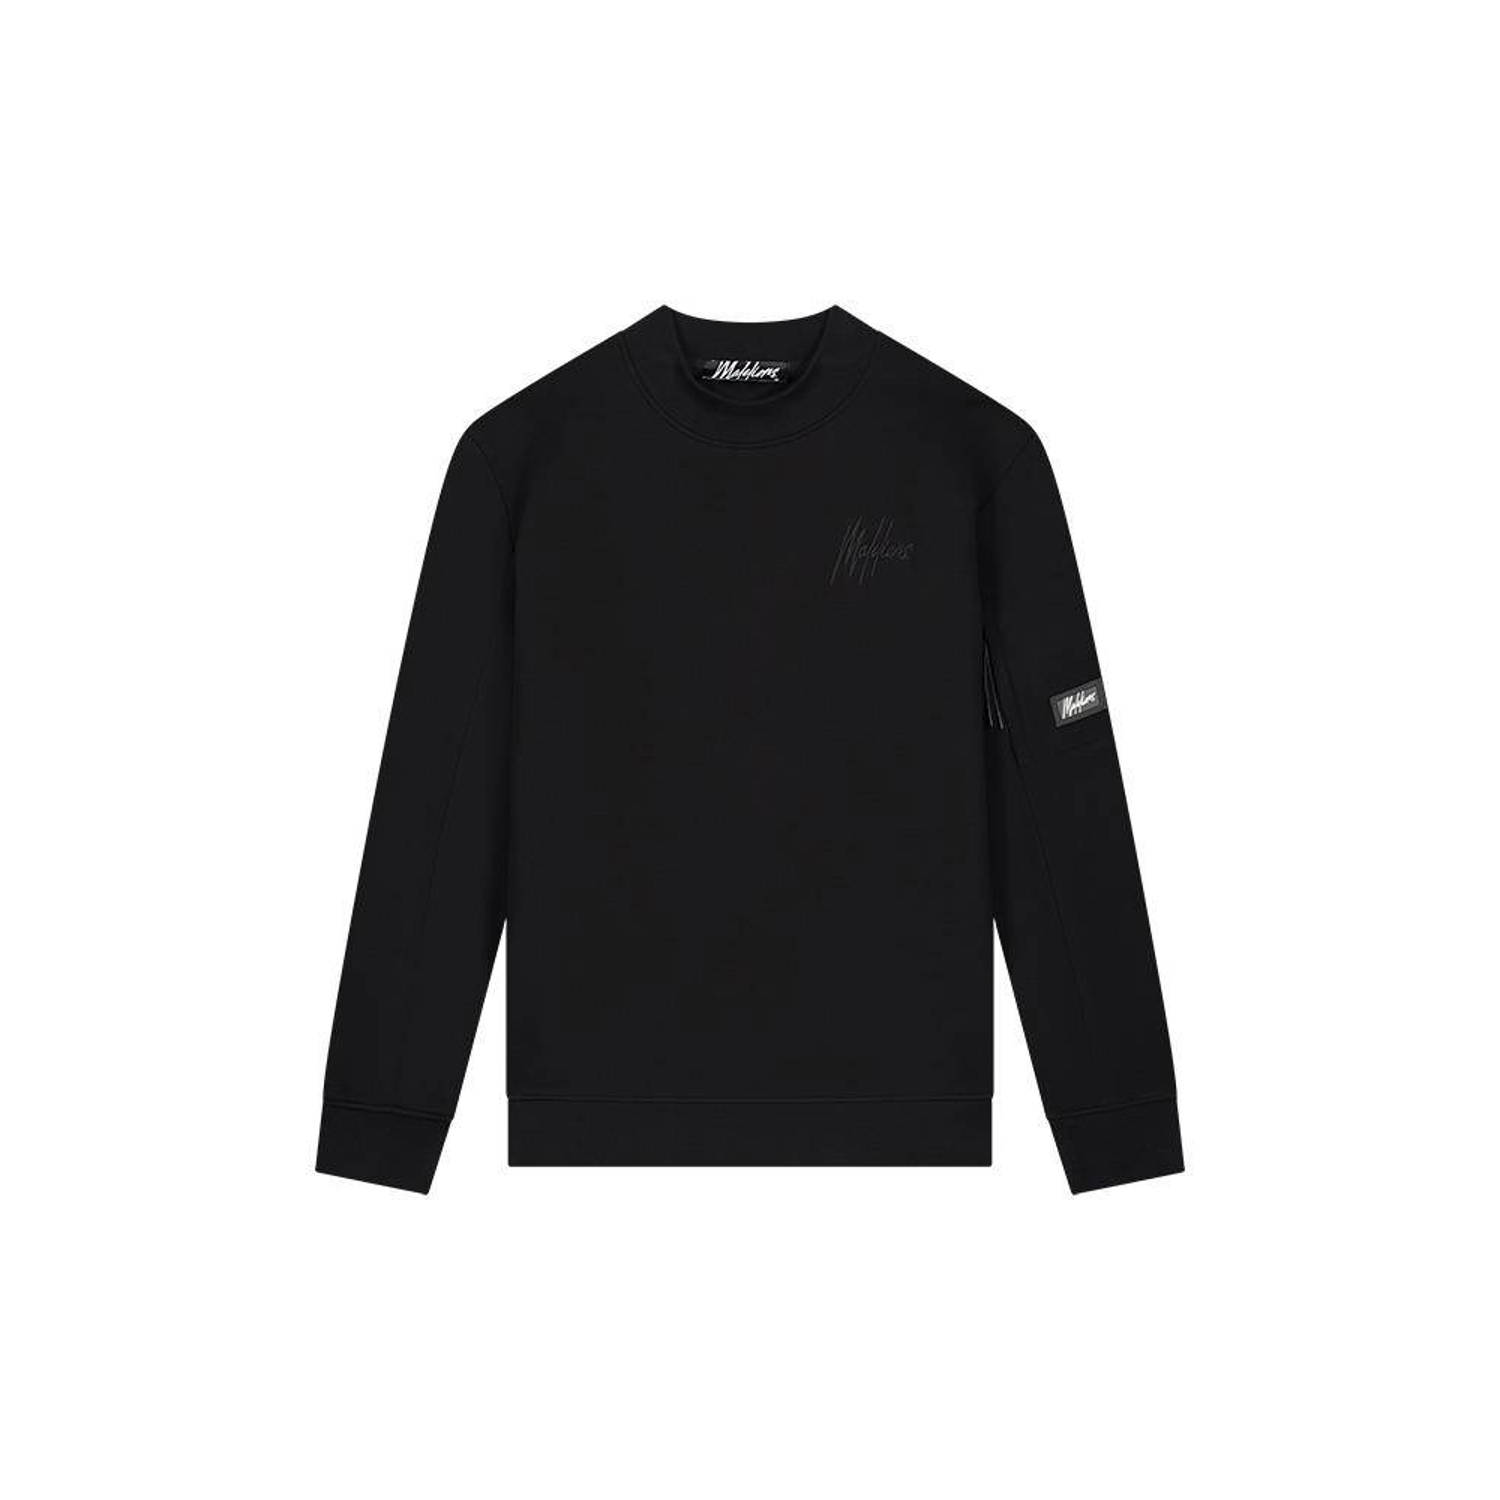 Malelions sweater met logo black